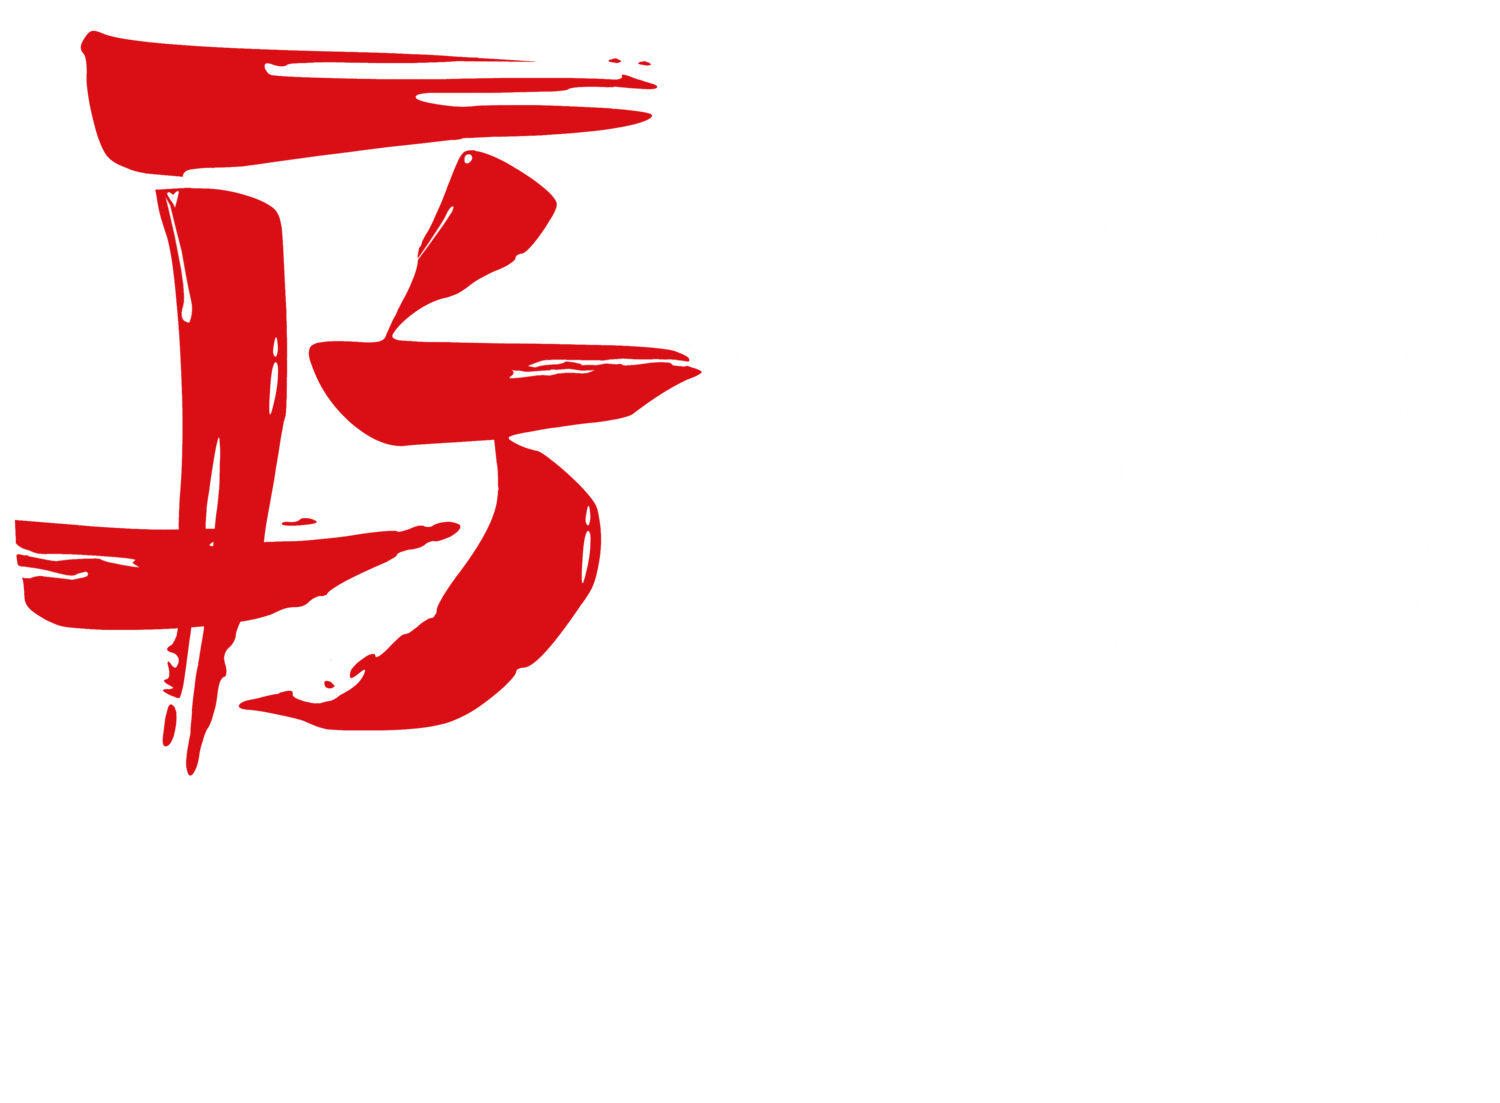 BJU - Fusion Japanese Cuisine